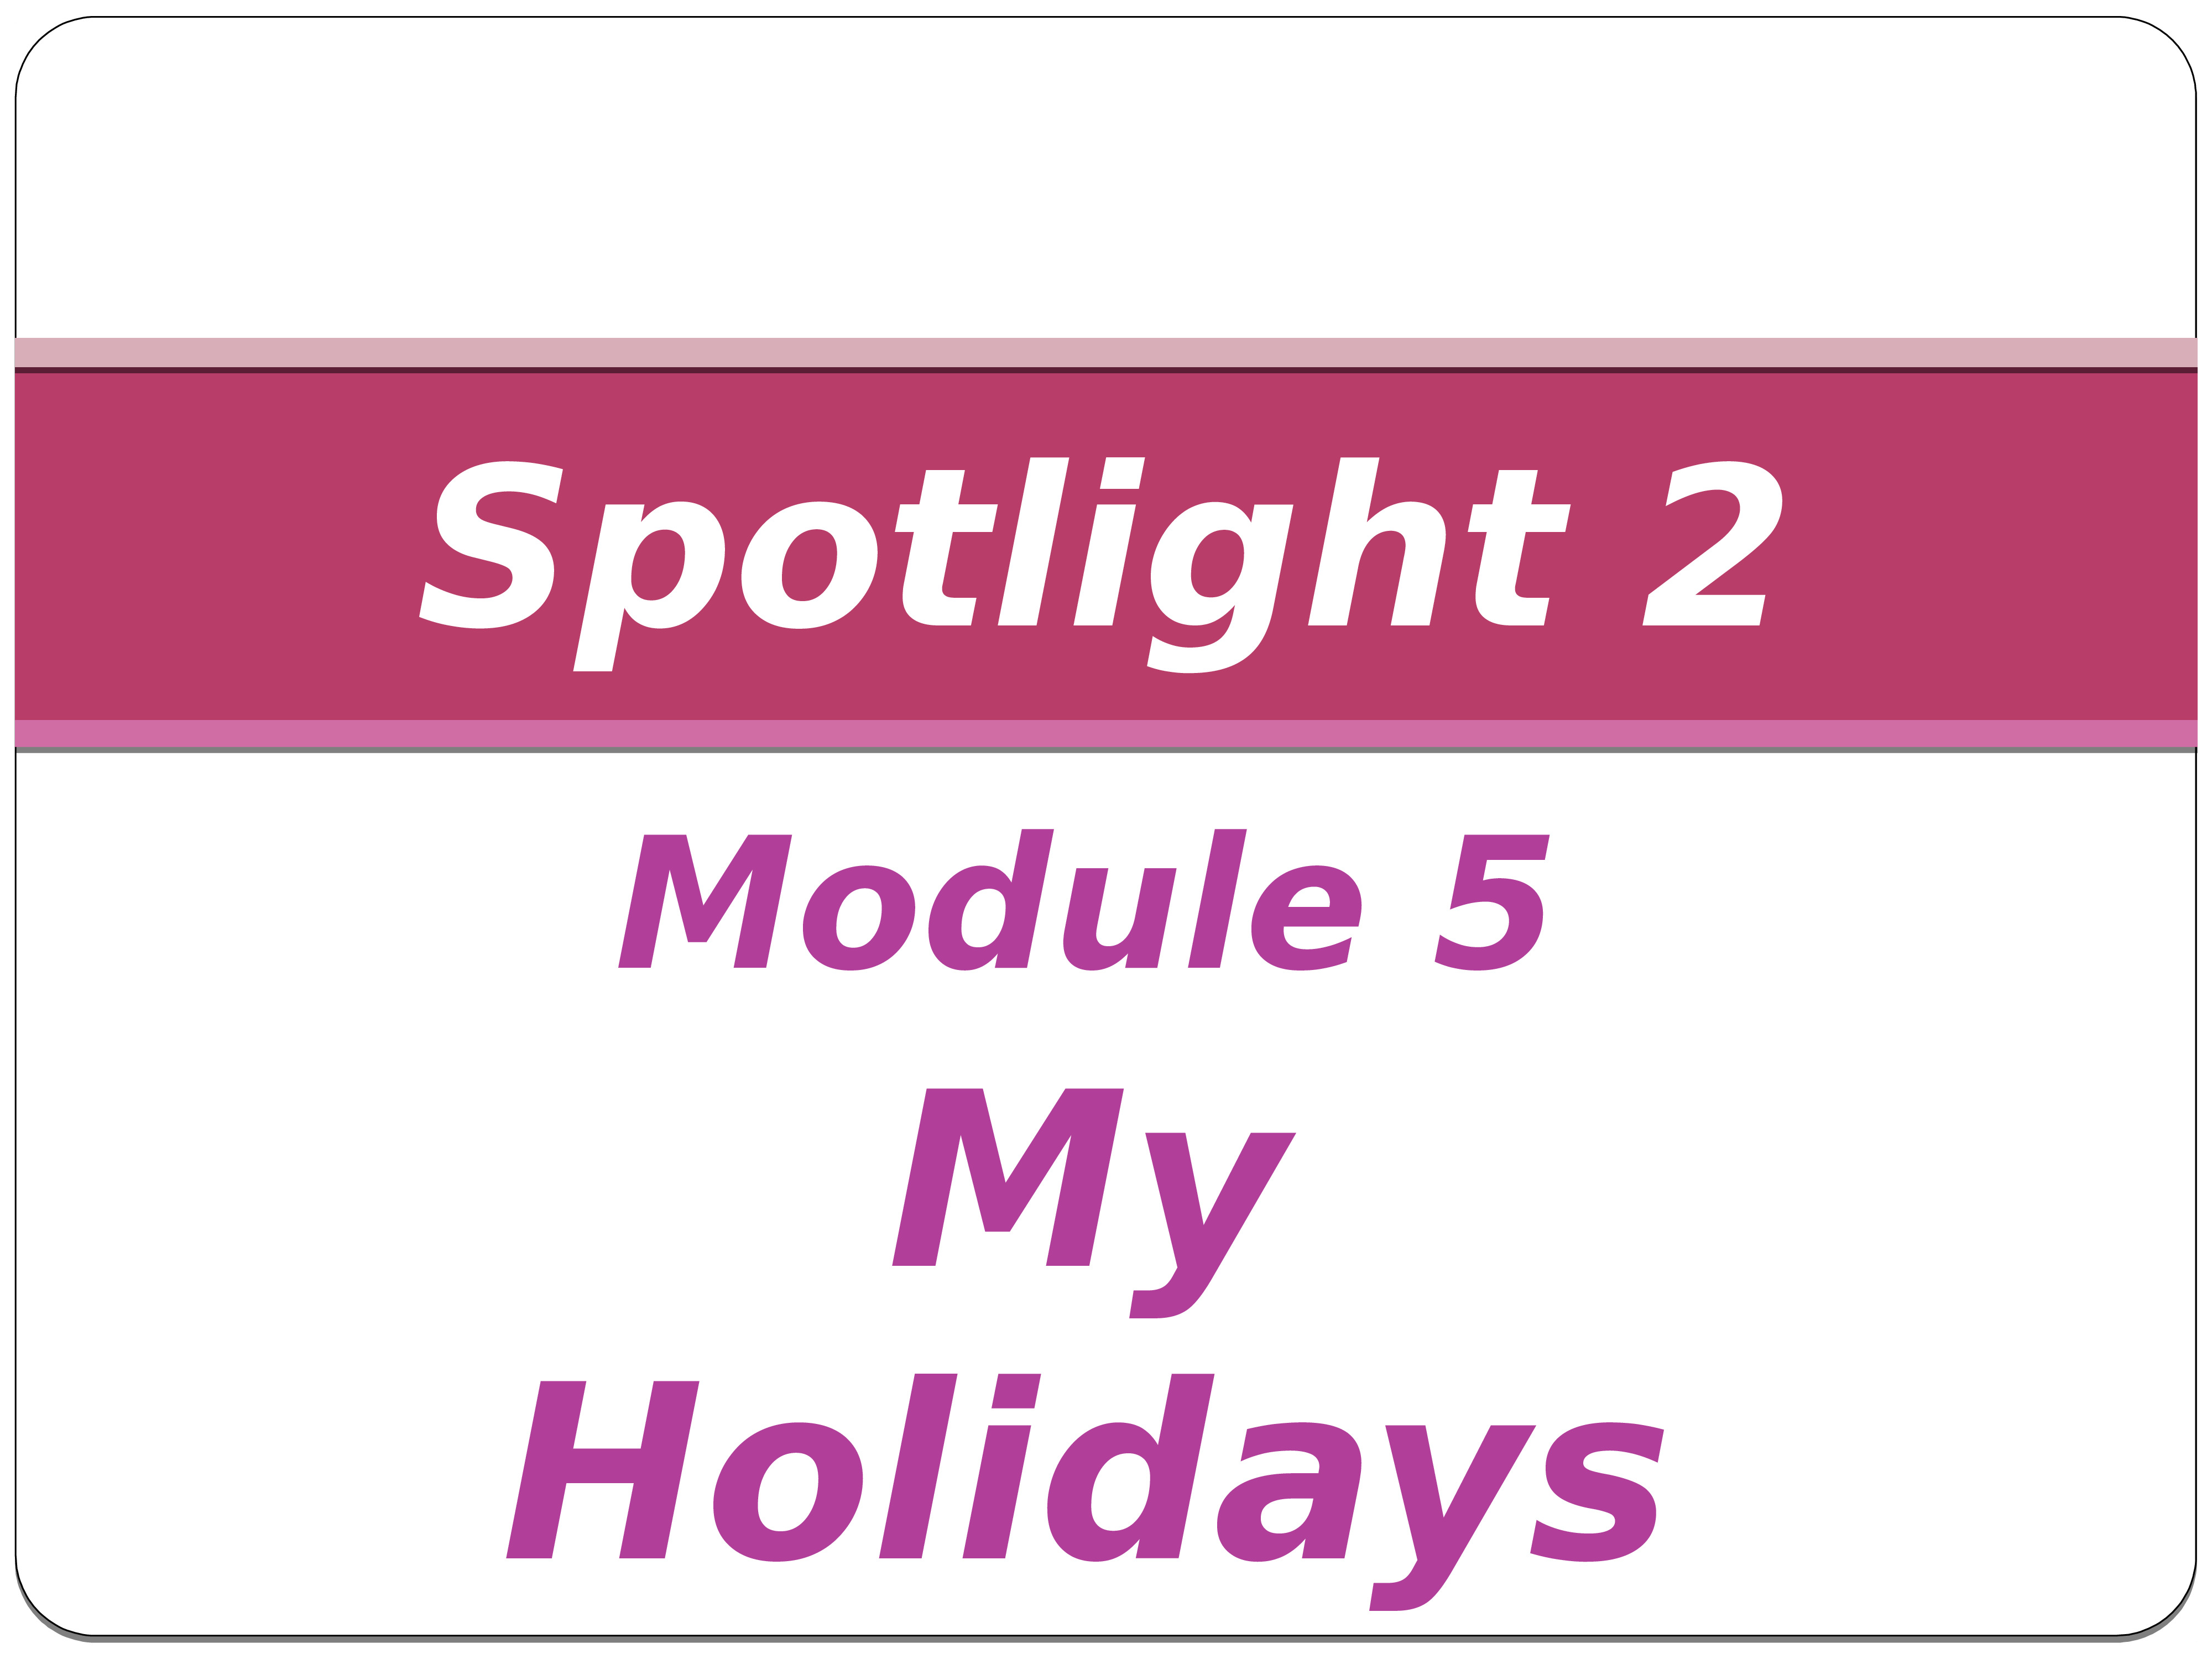 Спотлайт 2 my holidays. Spotlight 2 my Holidays. Спотлайт 2 класс my Holidays. Spotlight 2 Module 5 my Holidays картинки.